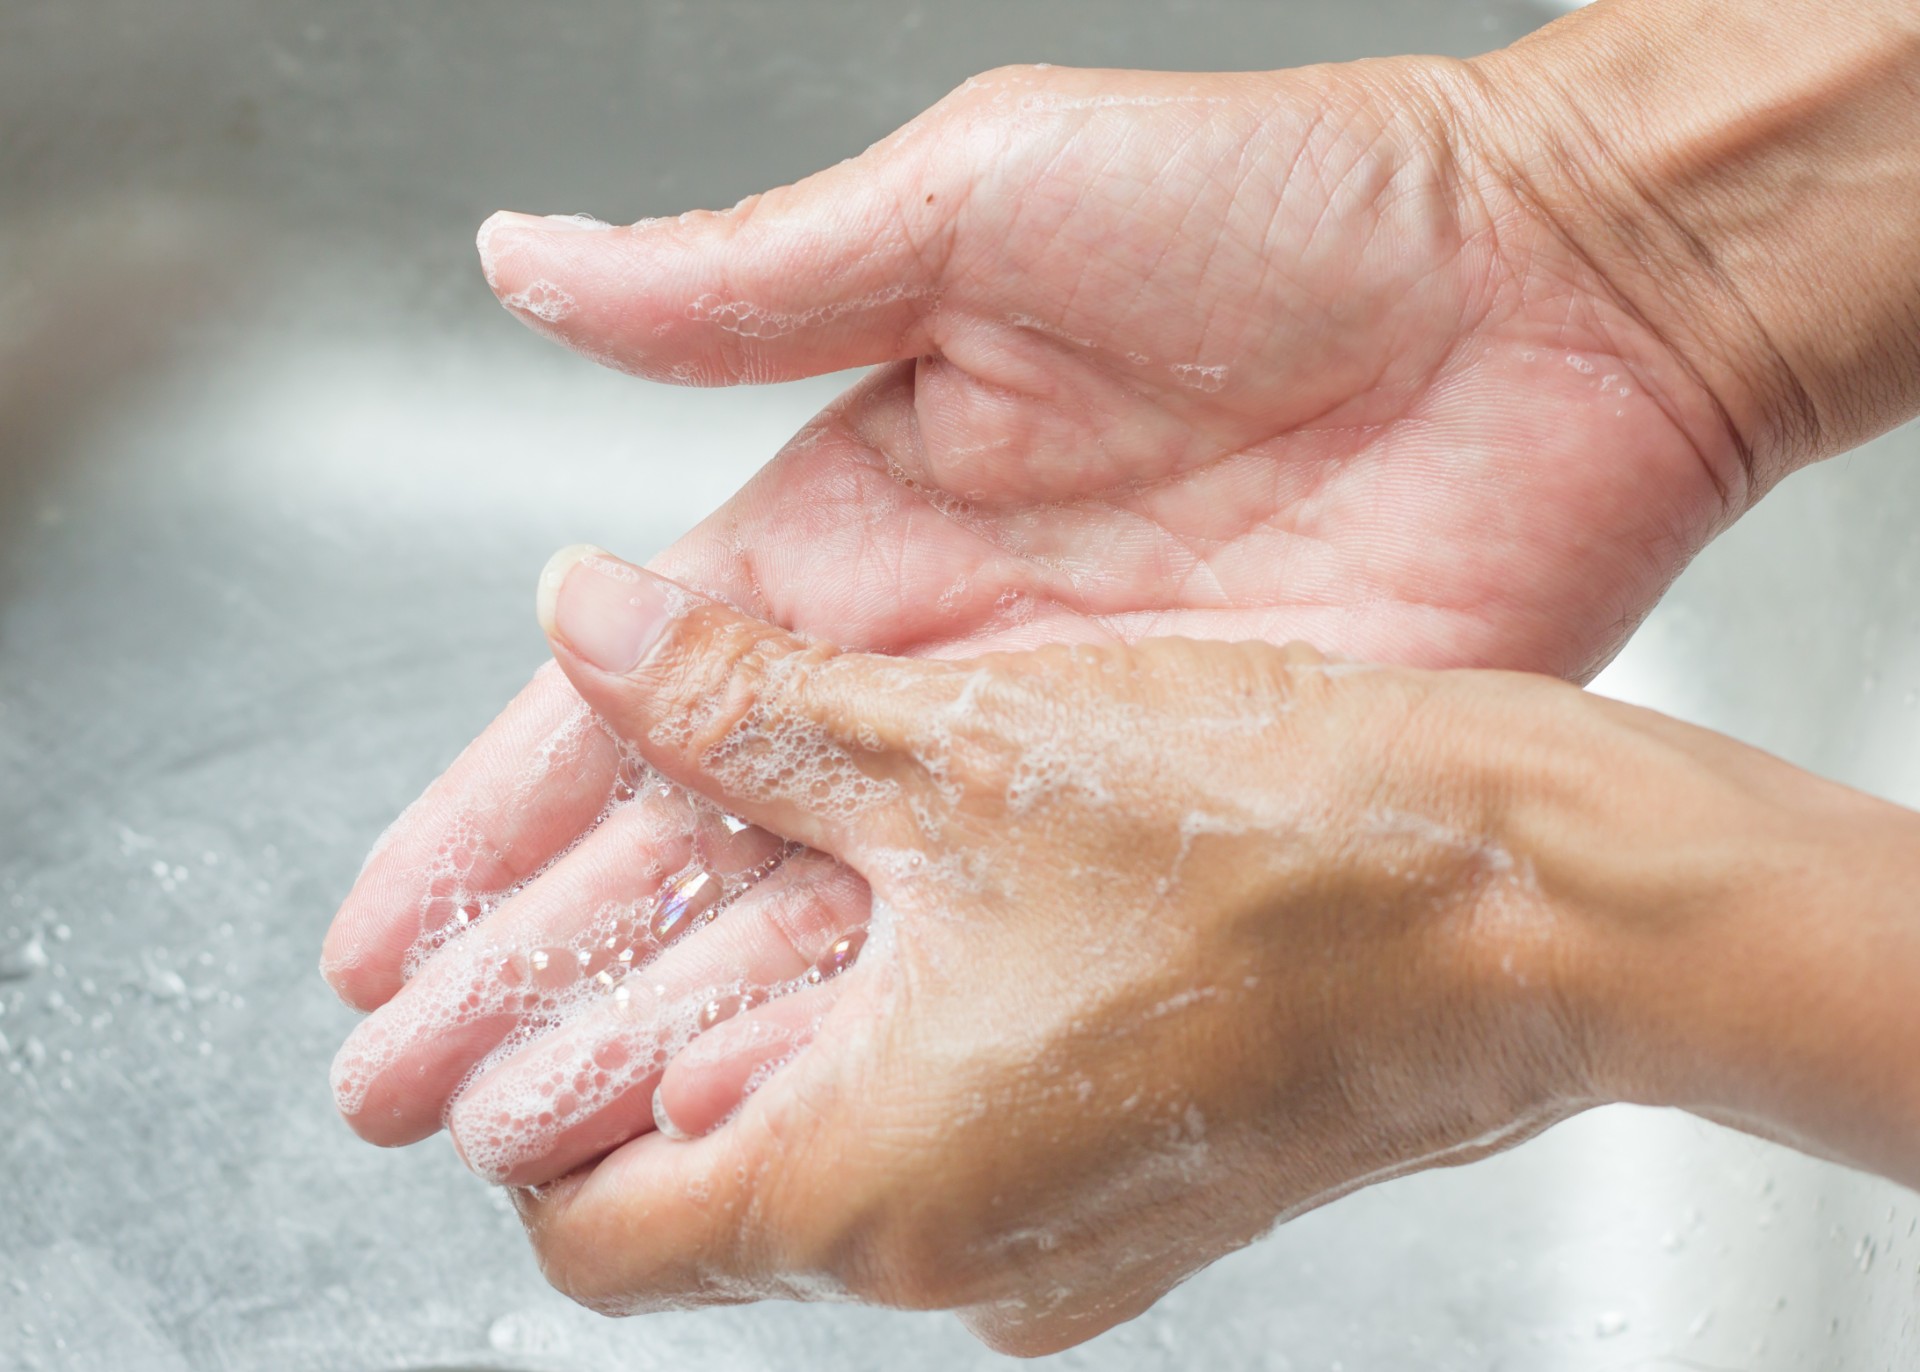 Adopt the 7 habits of good public hygiene